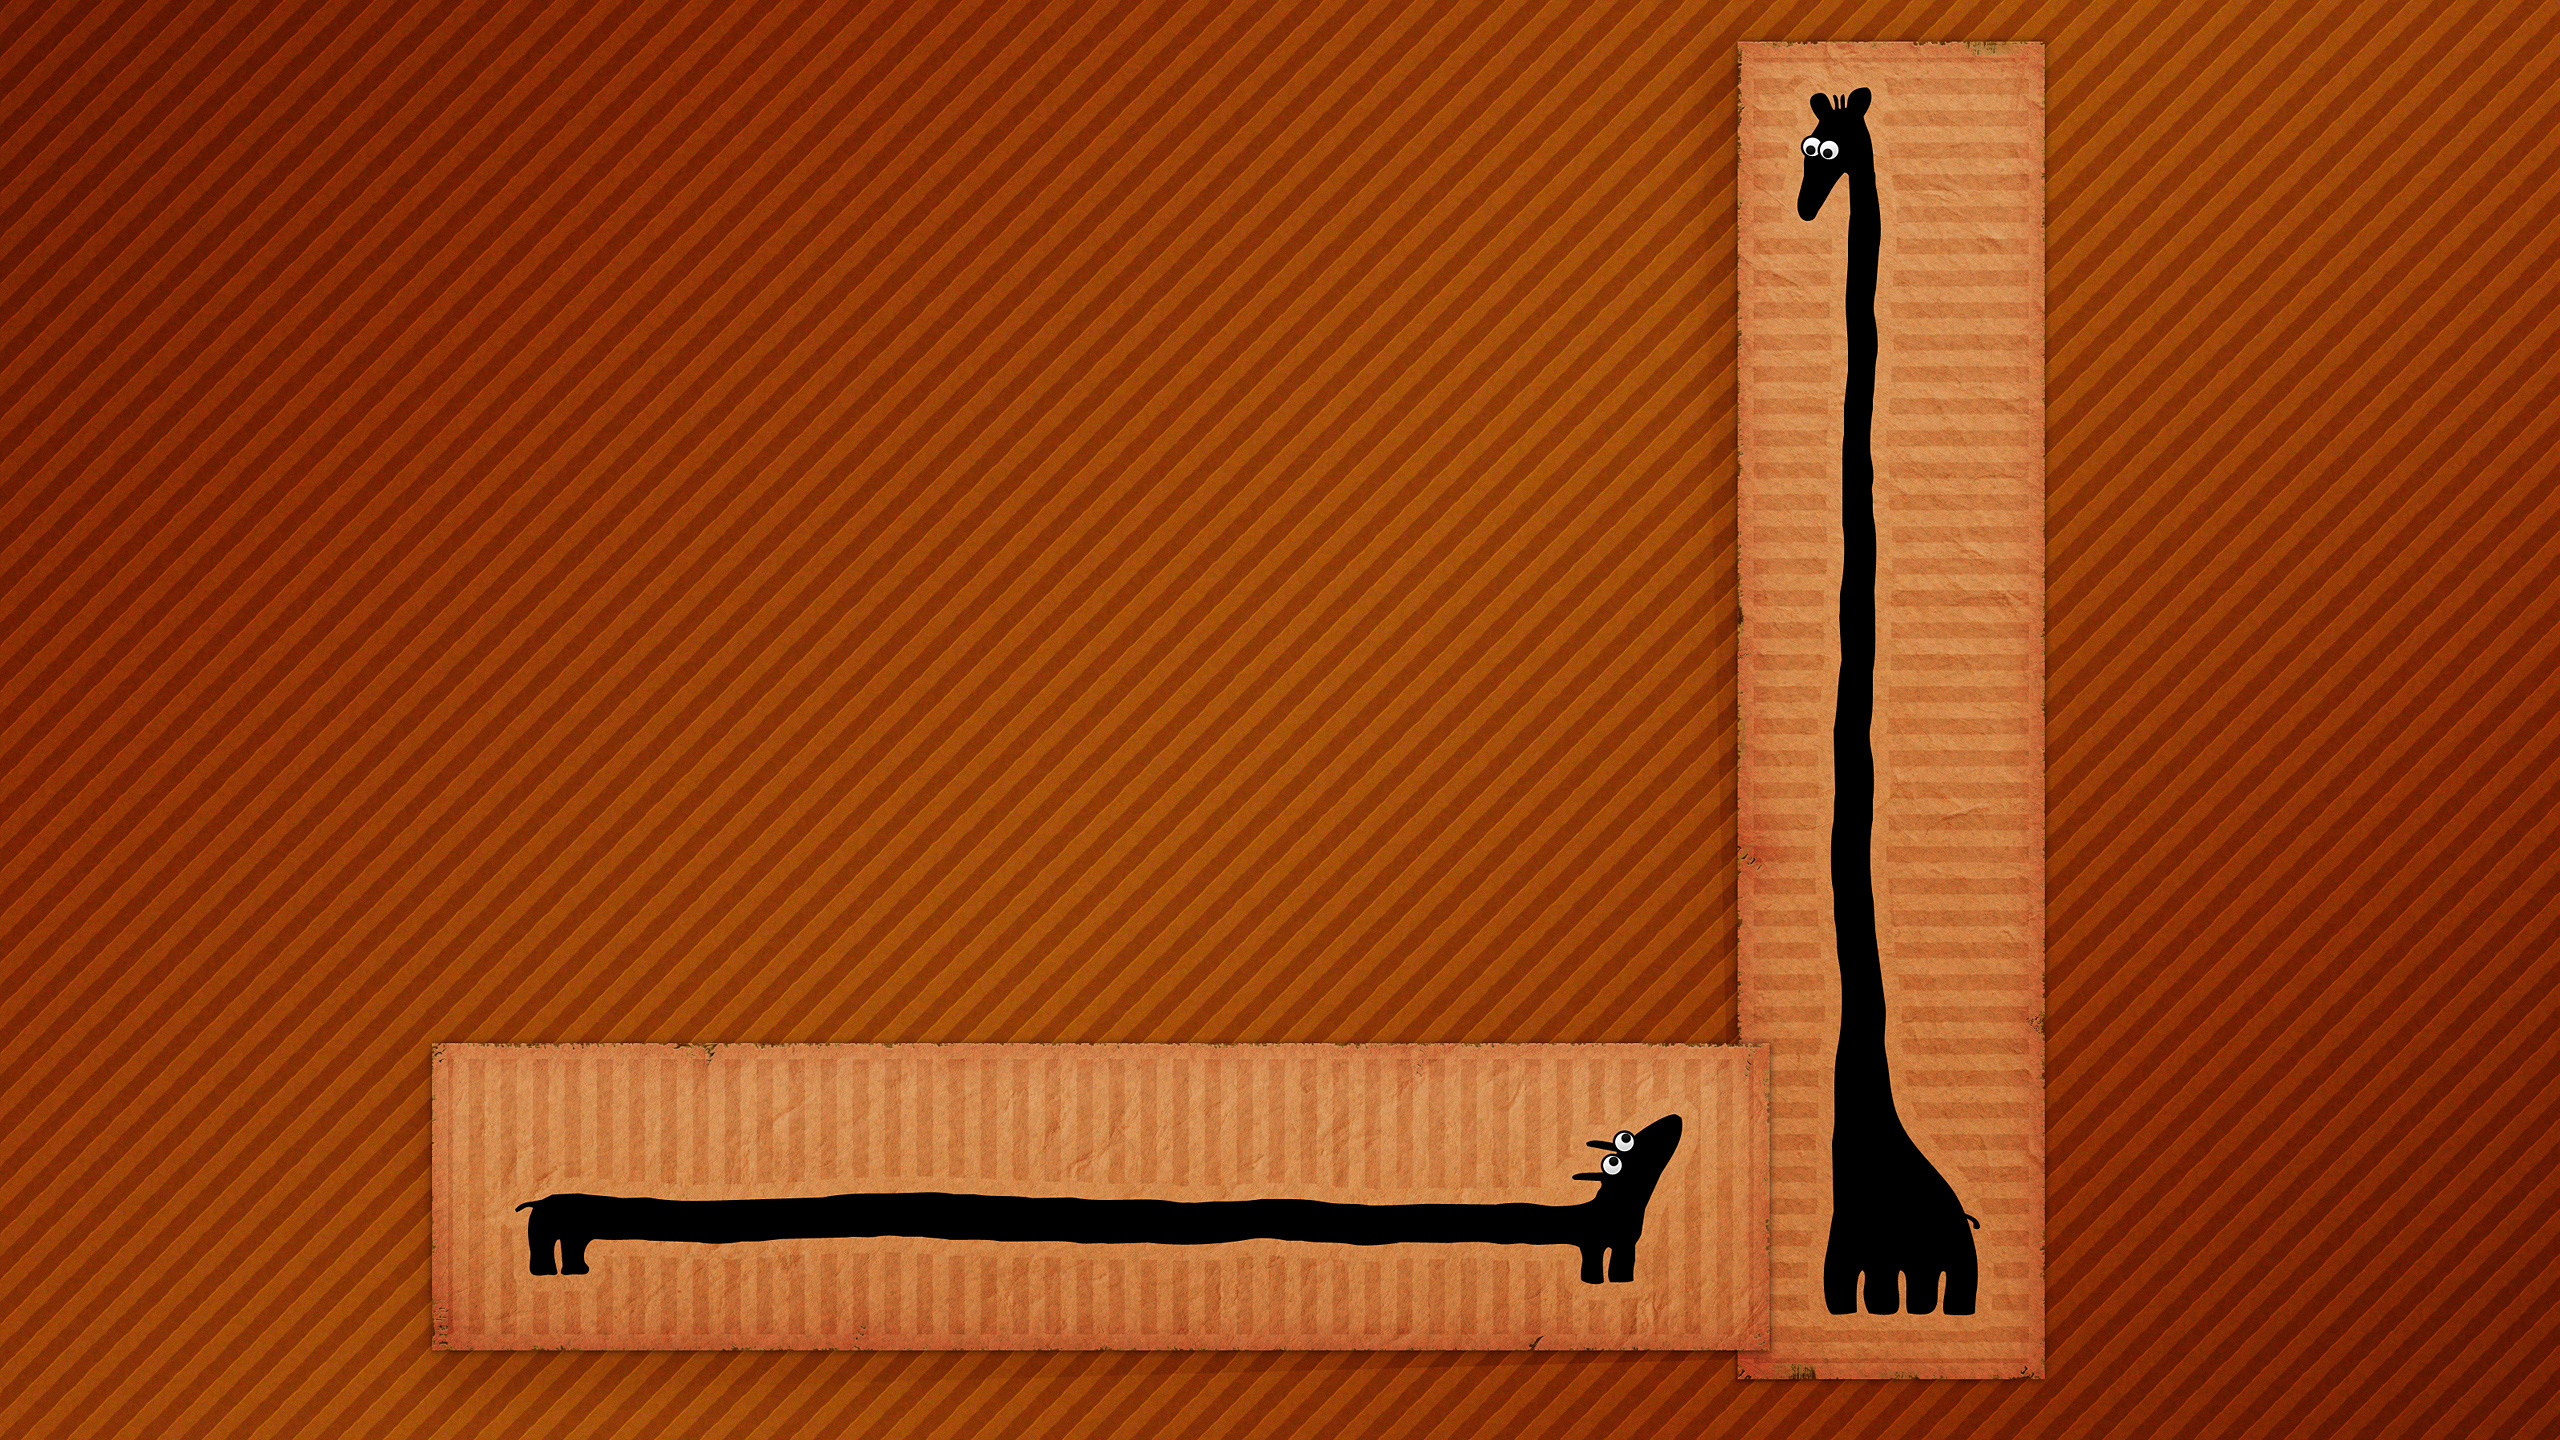 жираф, такса, рисунок, минимализм, линии